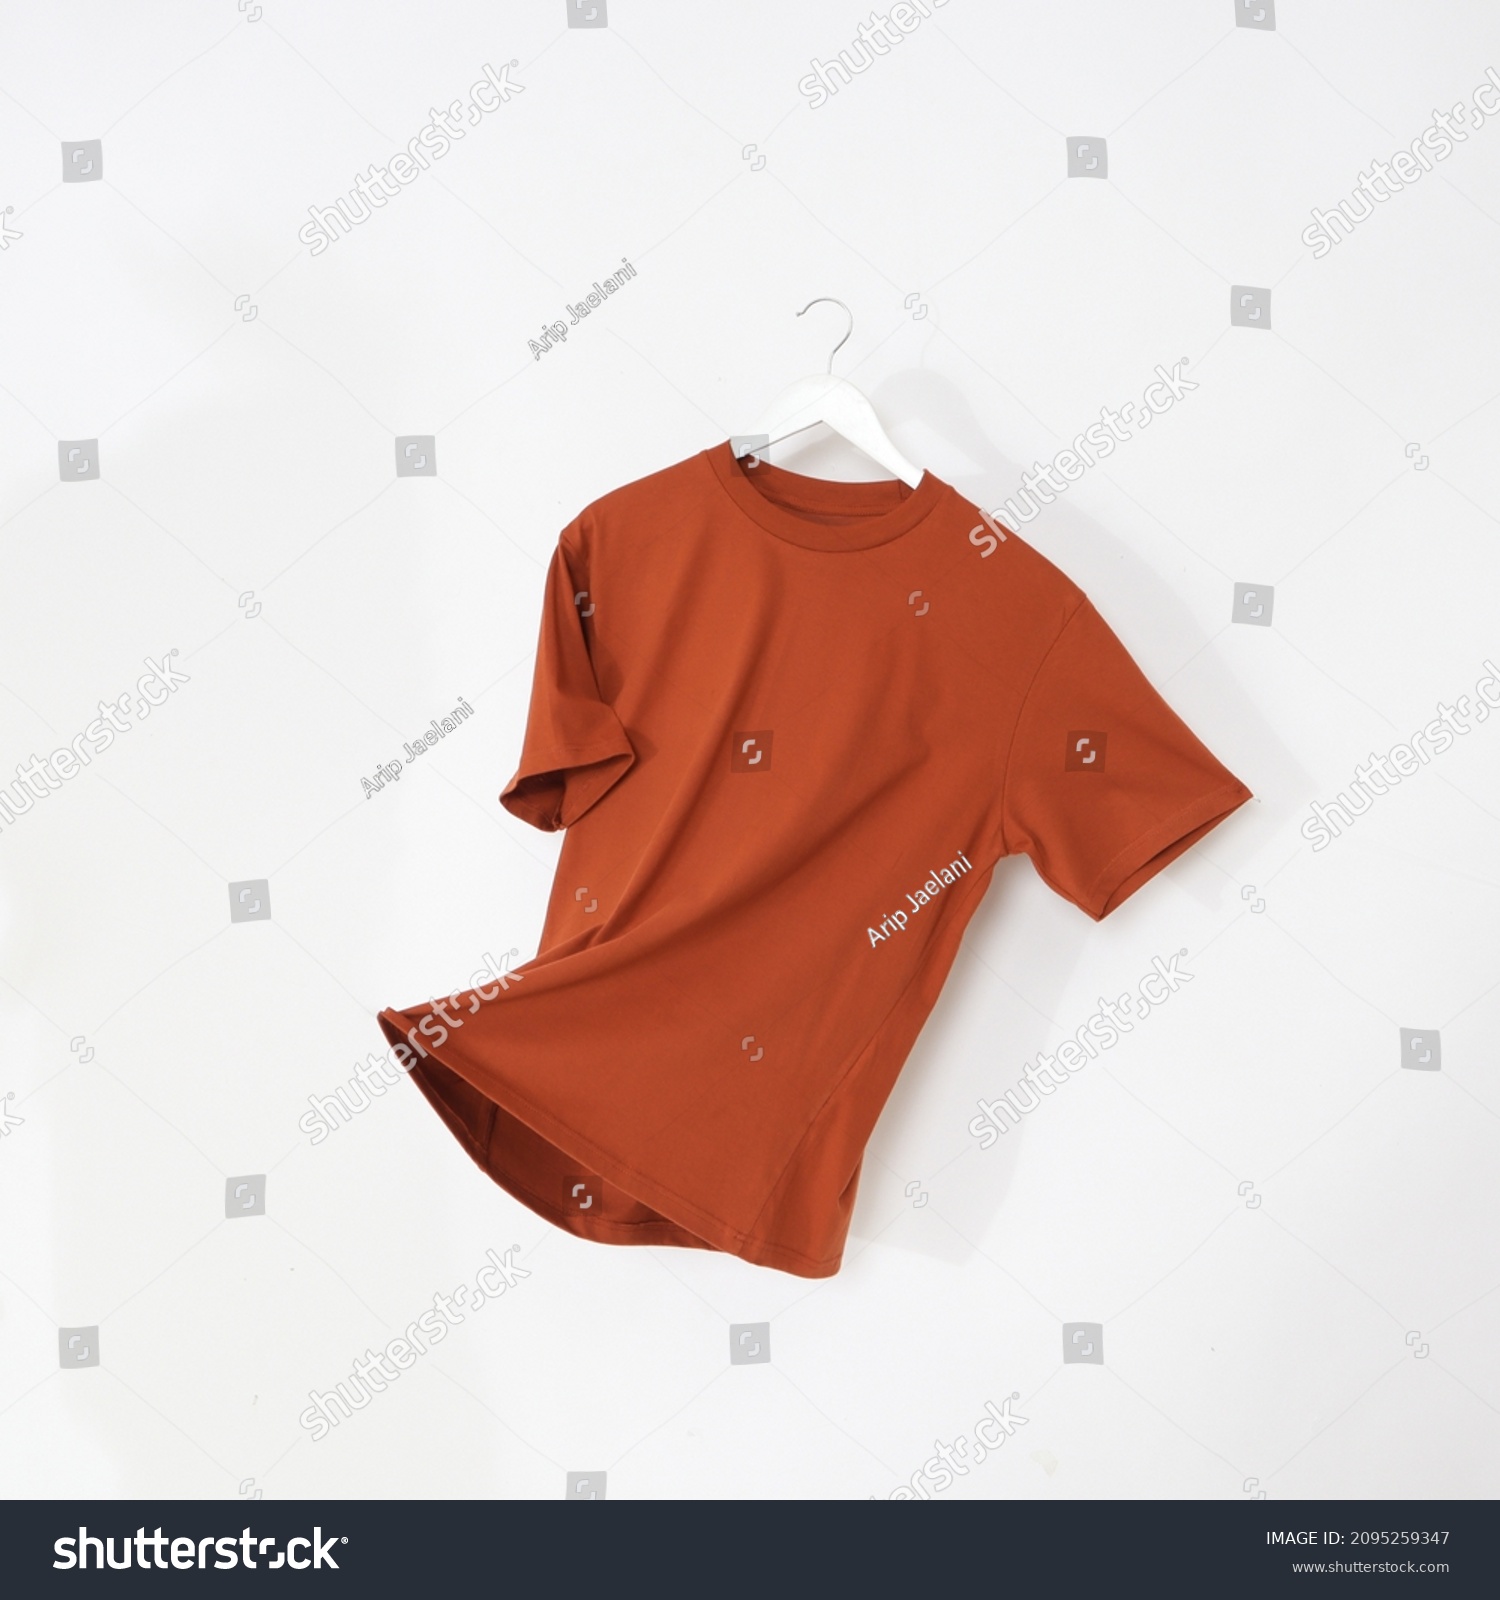 Orange tshirt with hanger. Flying cotton T-shirt isolated on white background. #2095259347